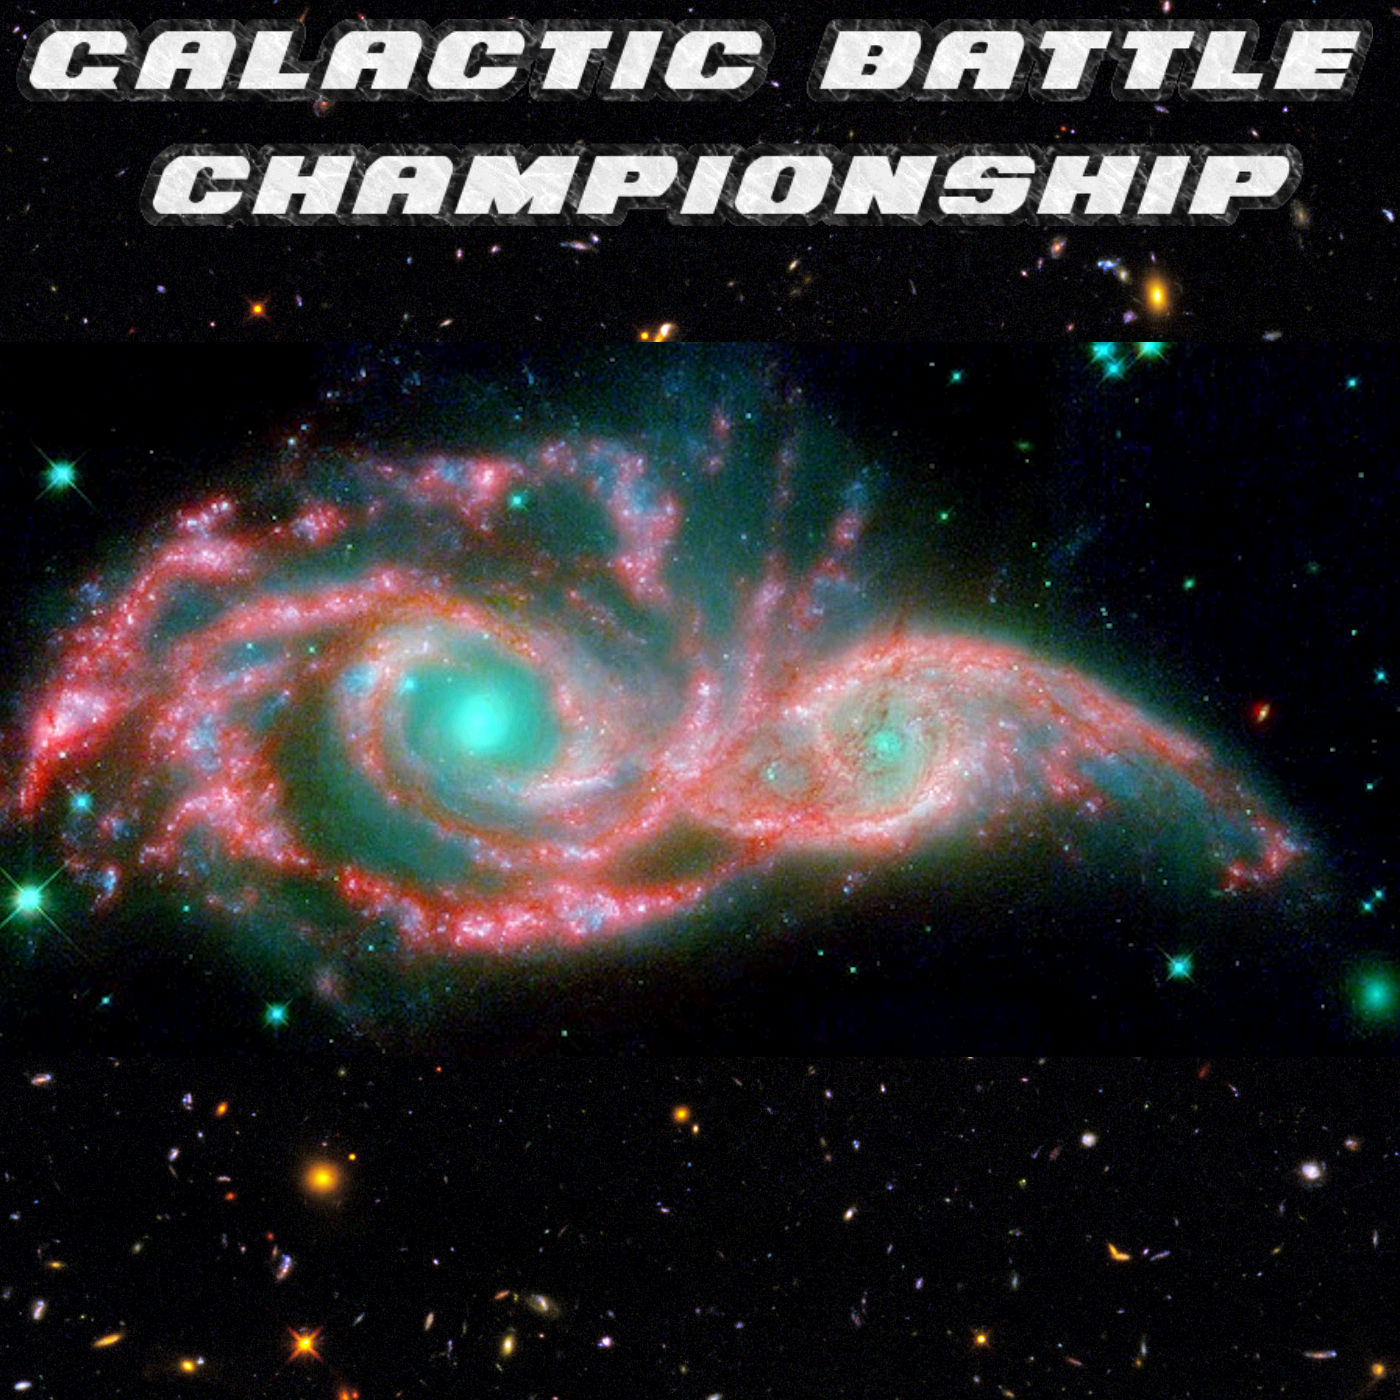 Galactic Battle Championship - Episode 1 - Galacticon vs Totemica